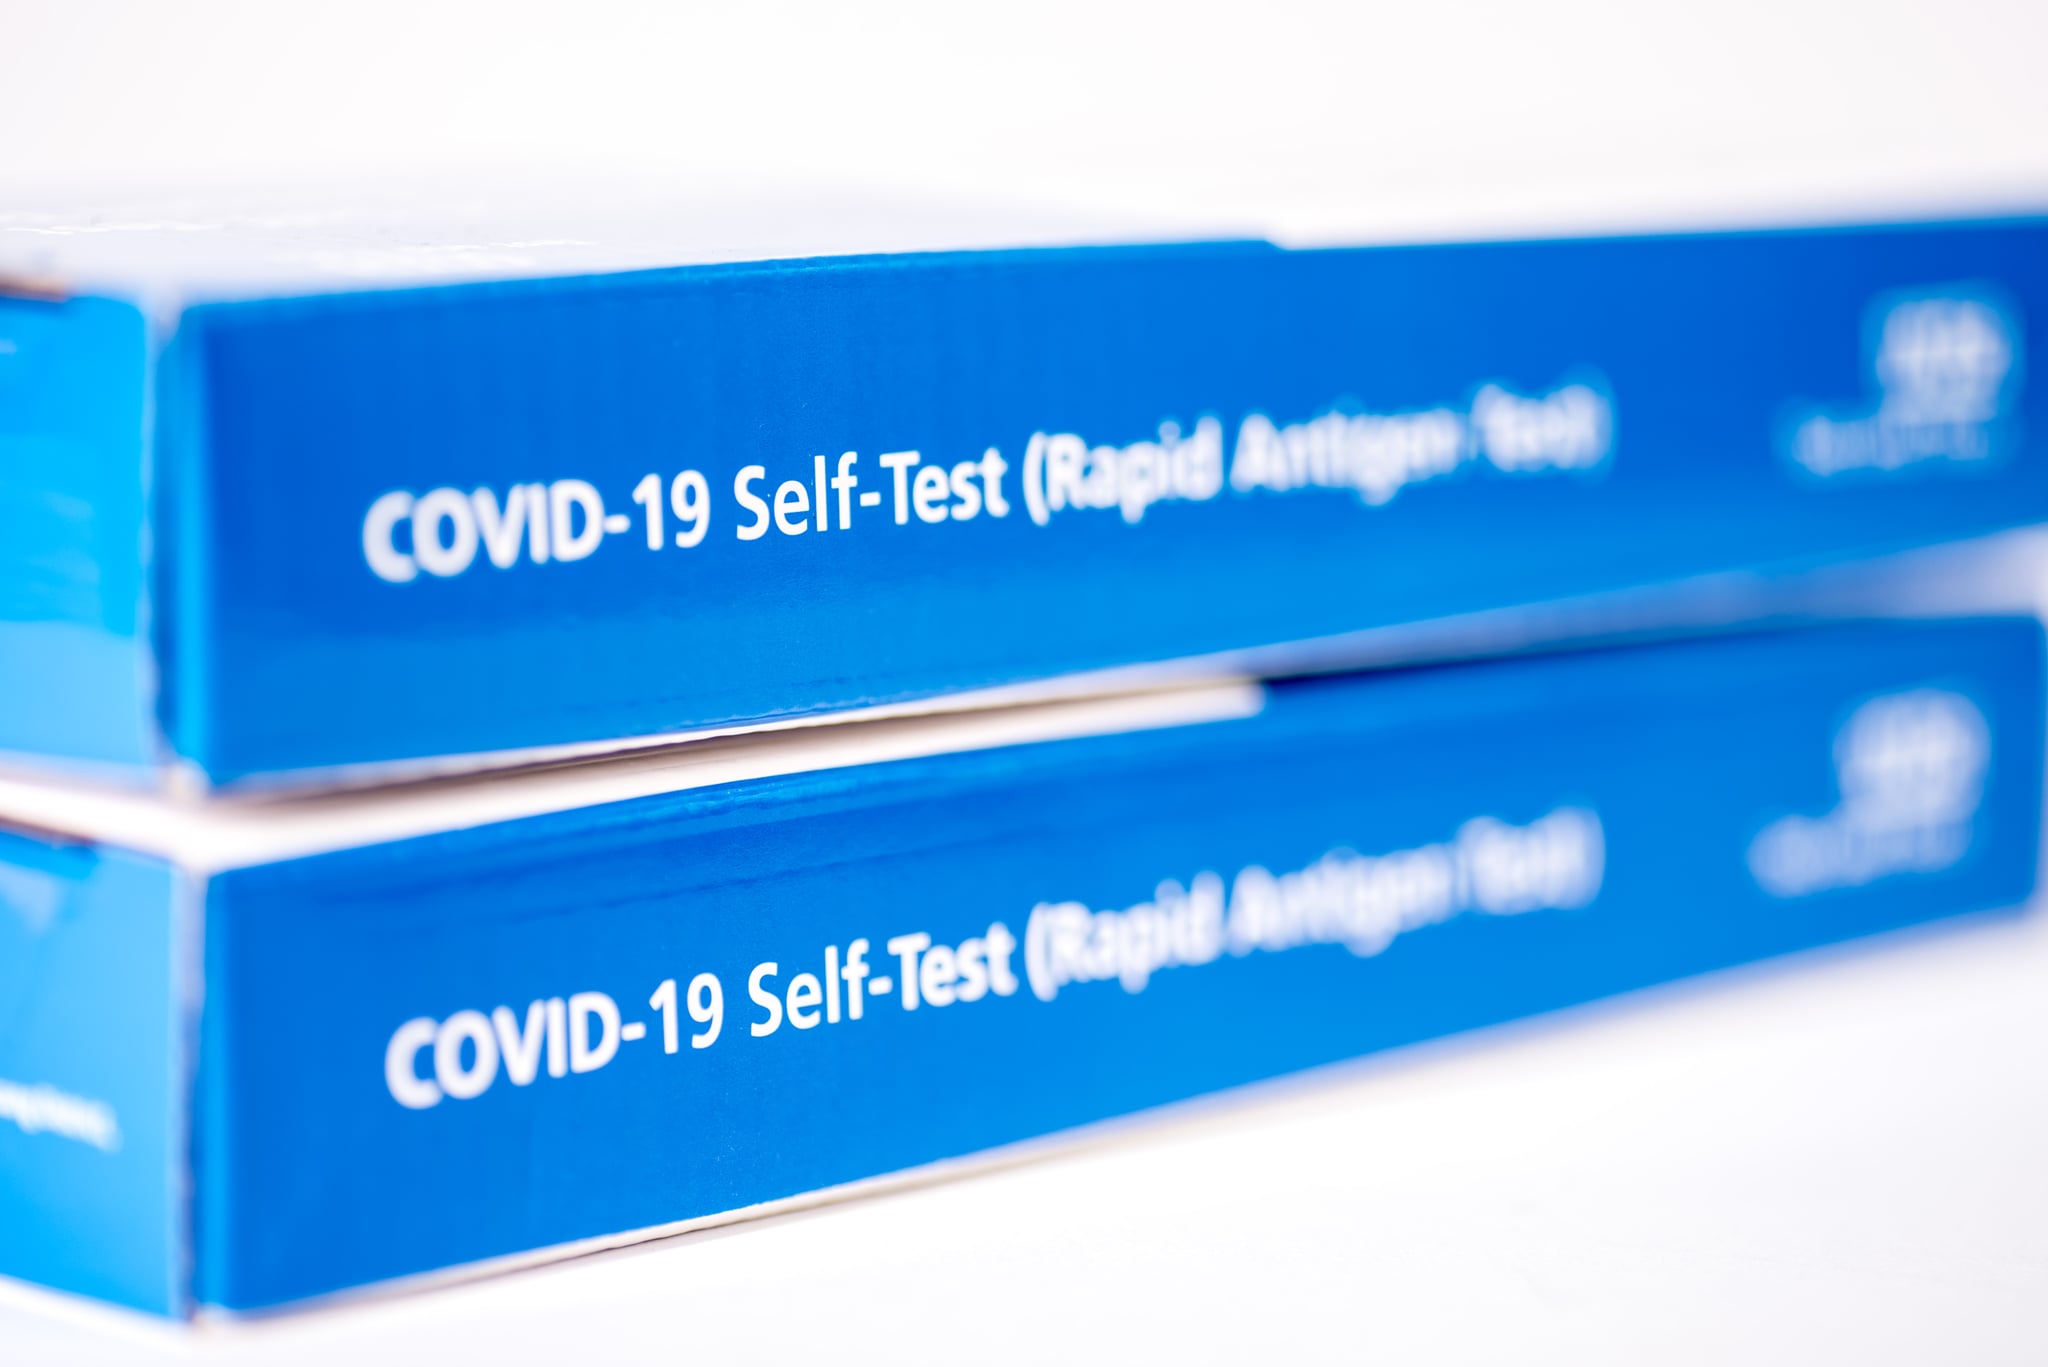 Close up photo of COVID-19 self test (rapid antigen test) box.